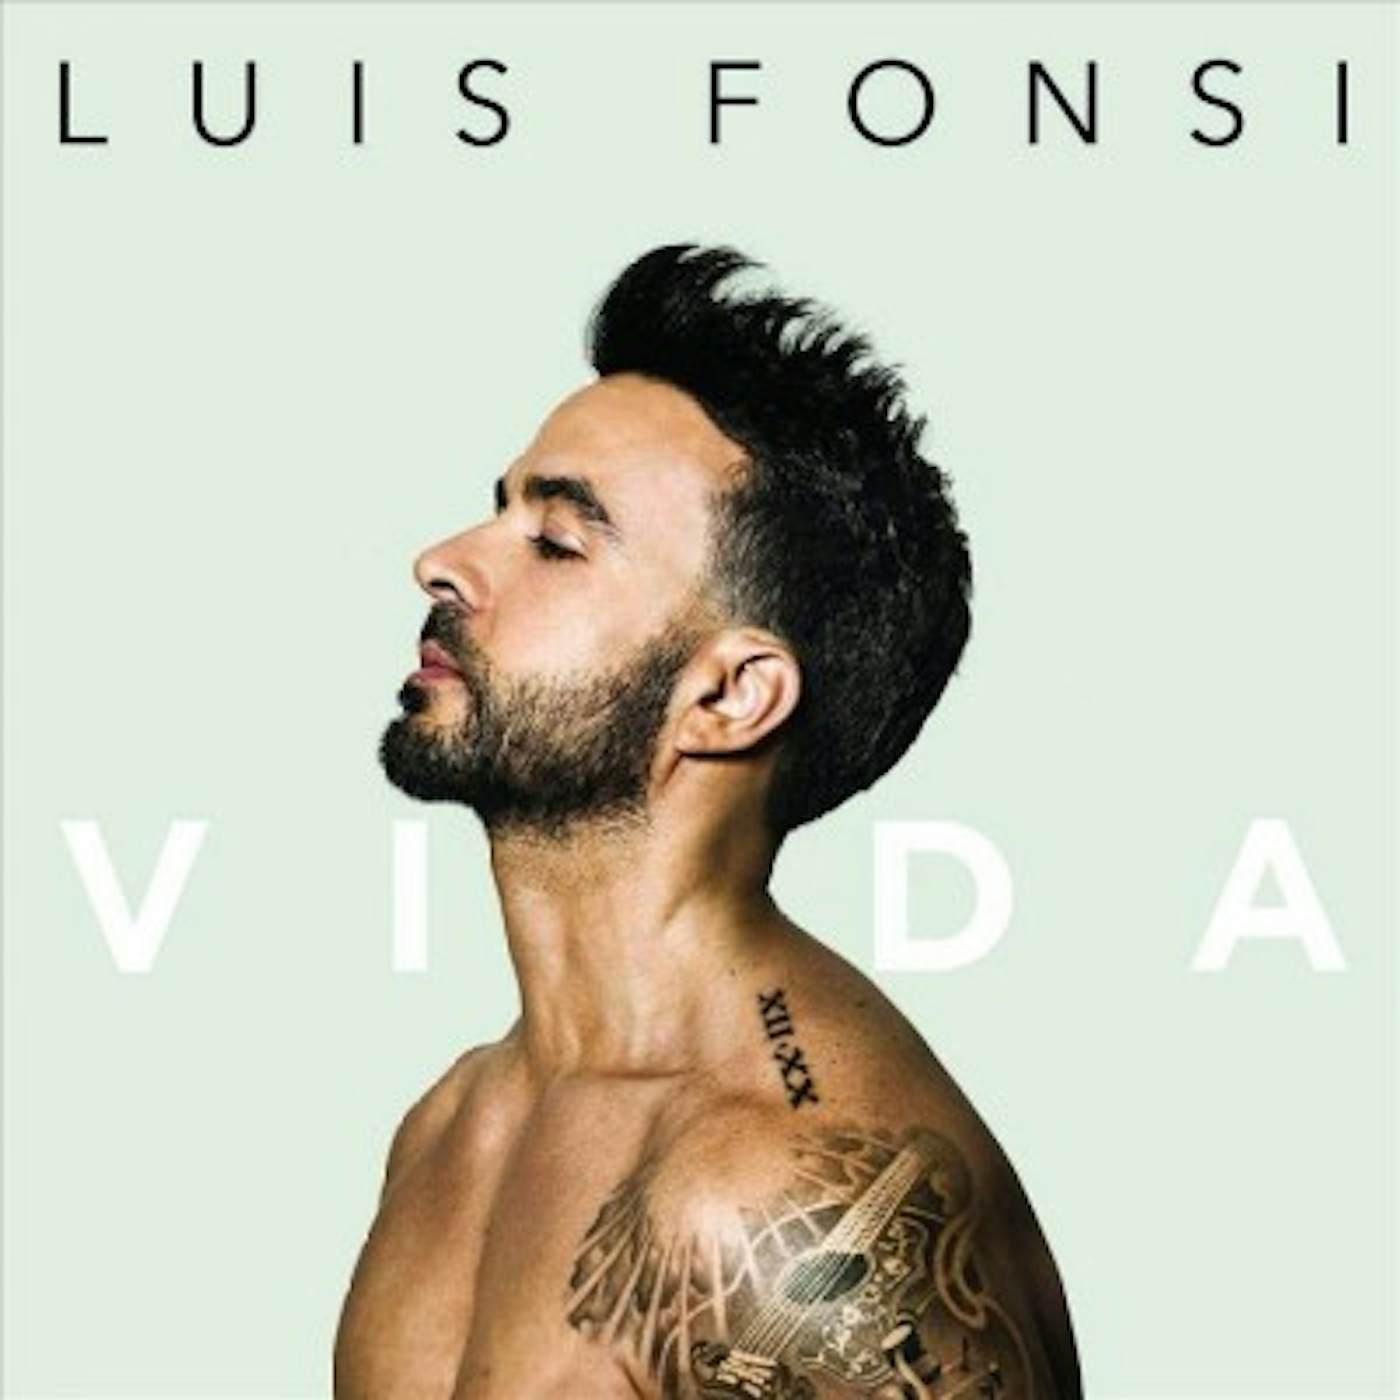 Luis Fonsi VIDA CD